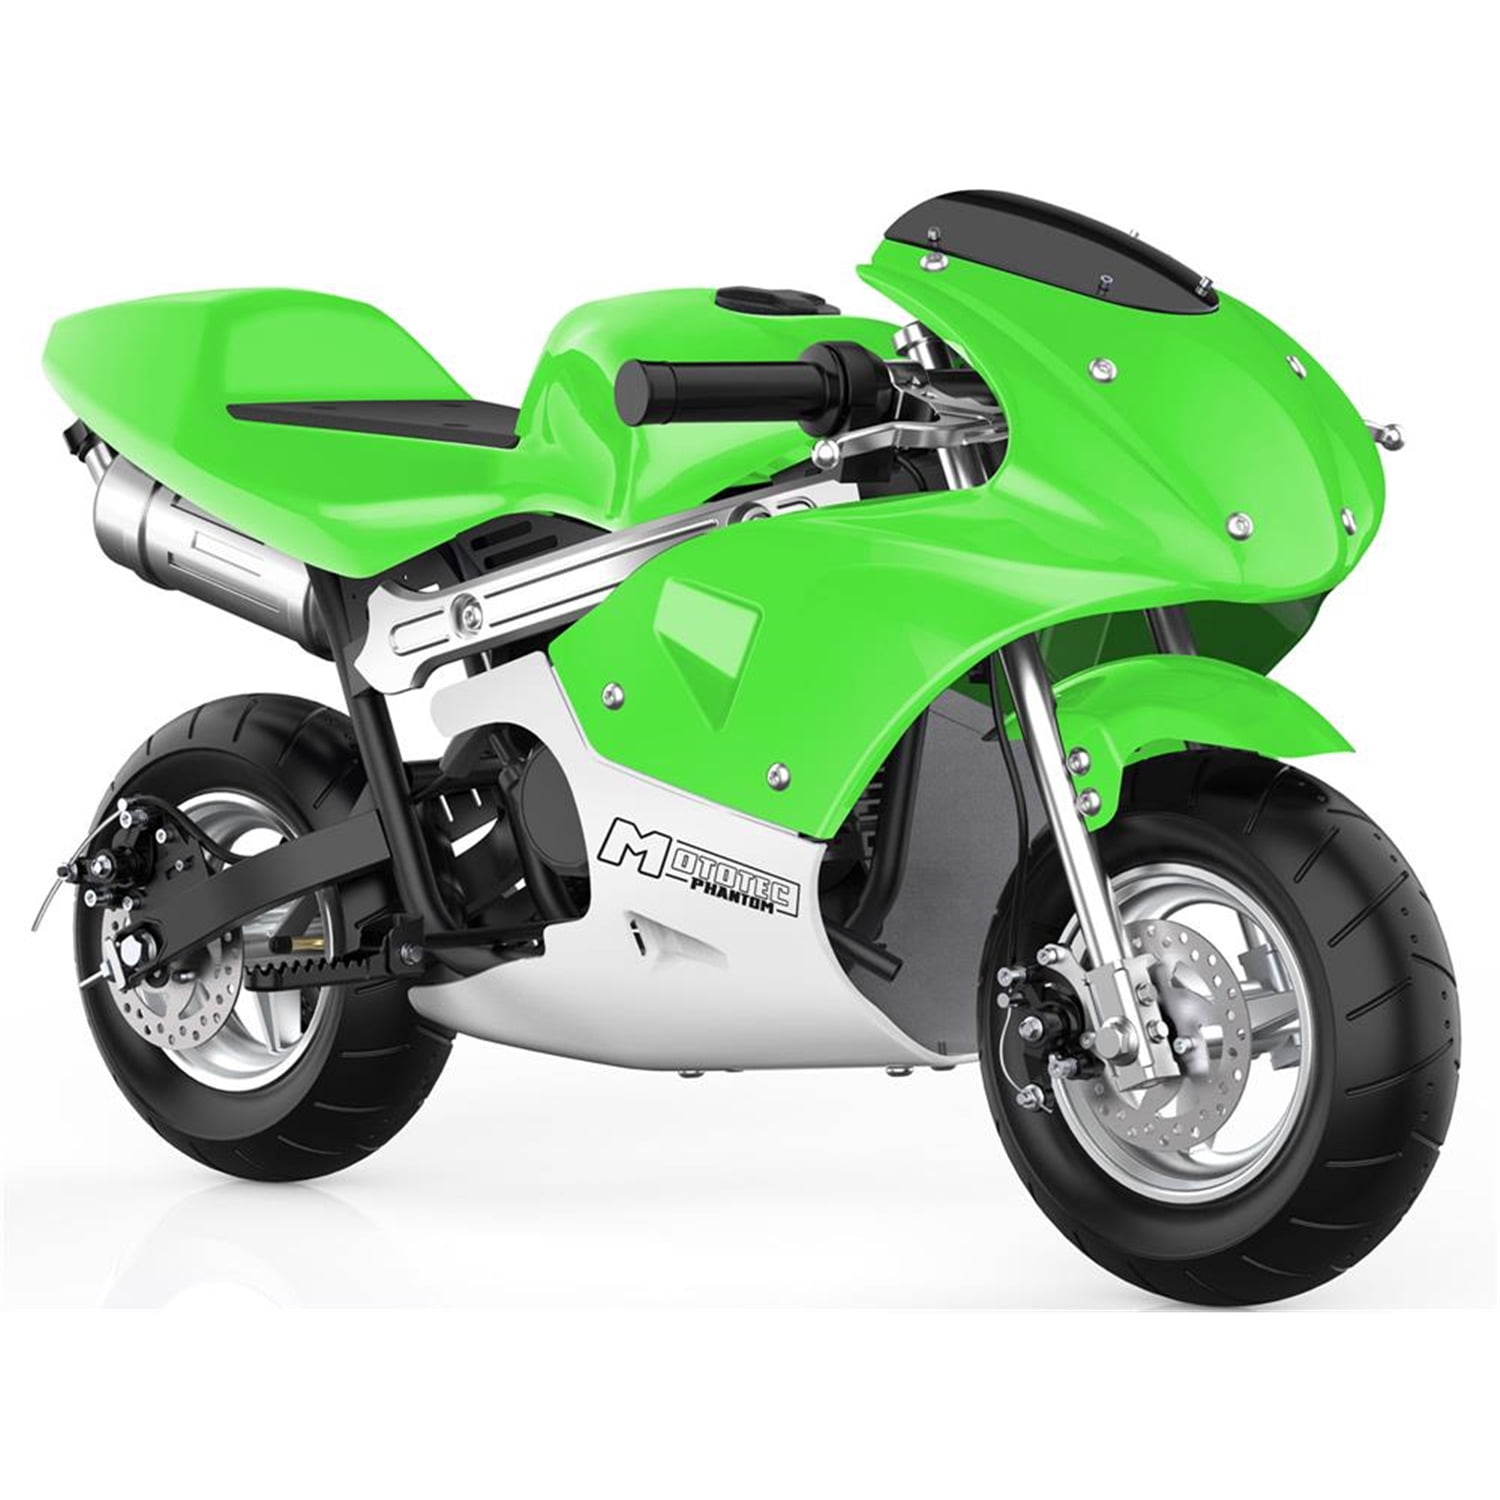 Skullracing Gas Powered Mini Pocket Bike Motorcycle 50rr for sale online orange 